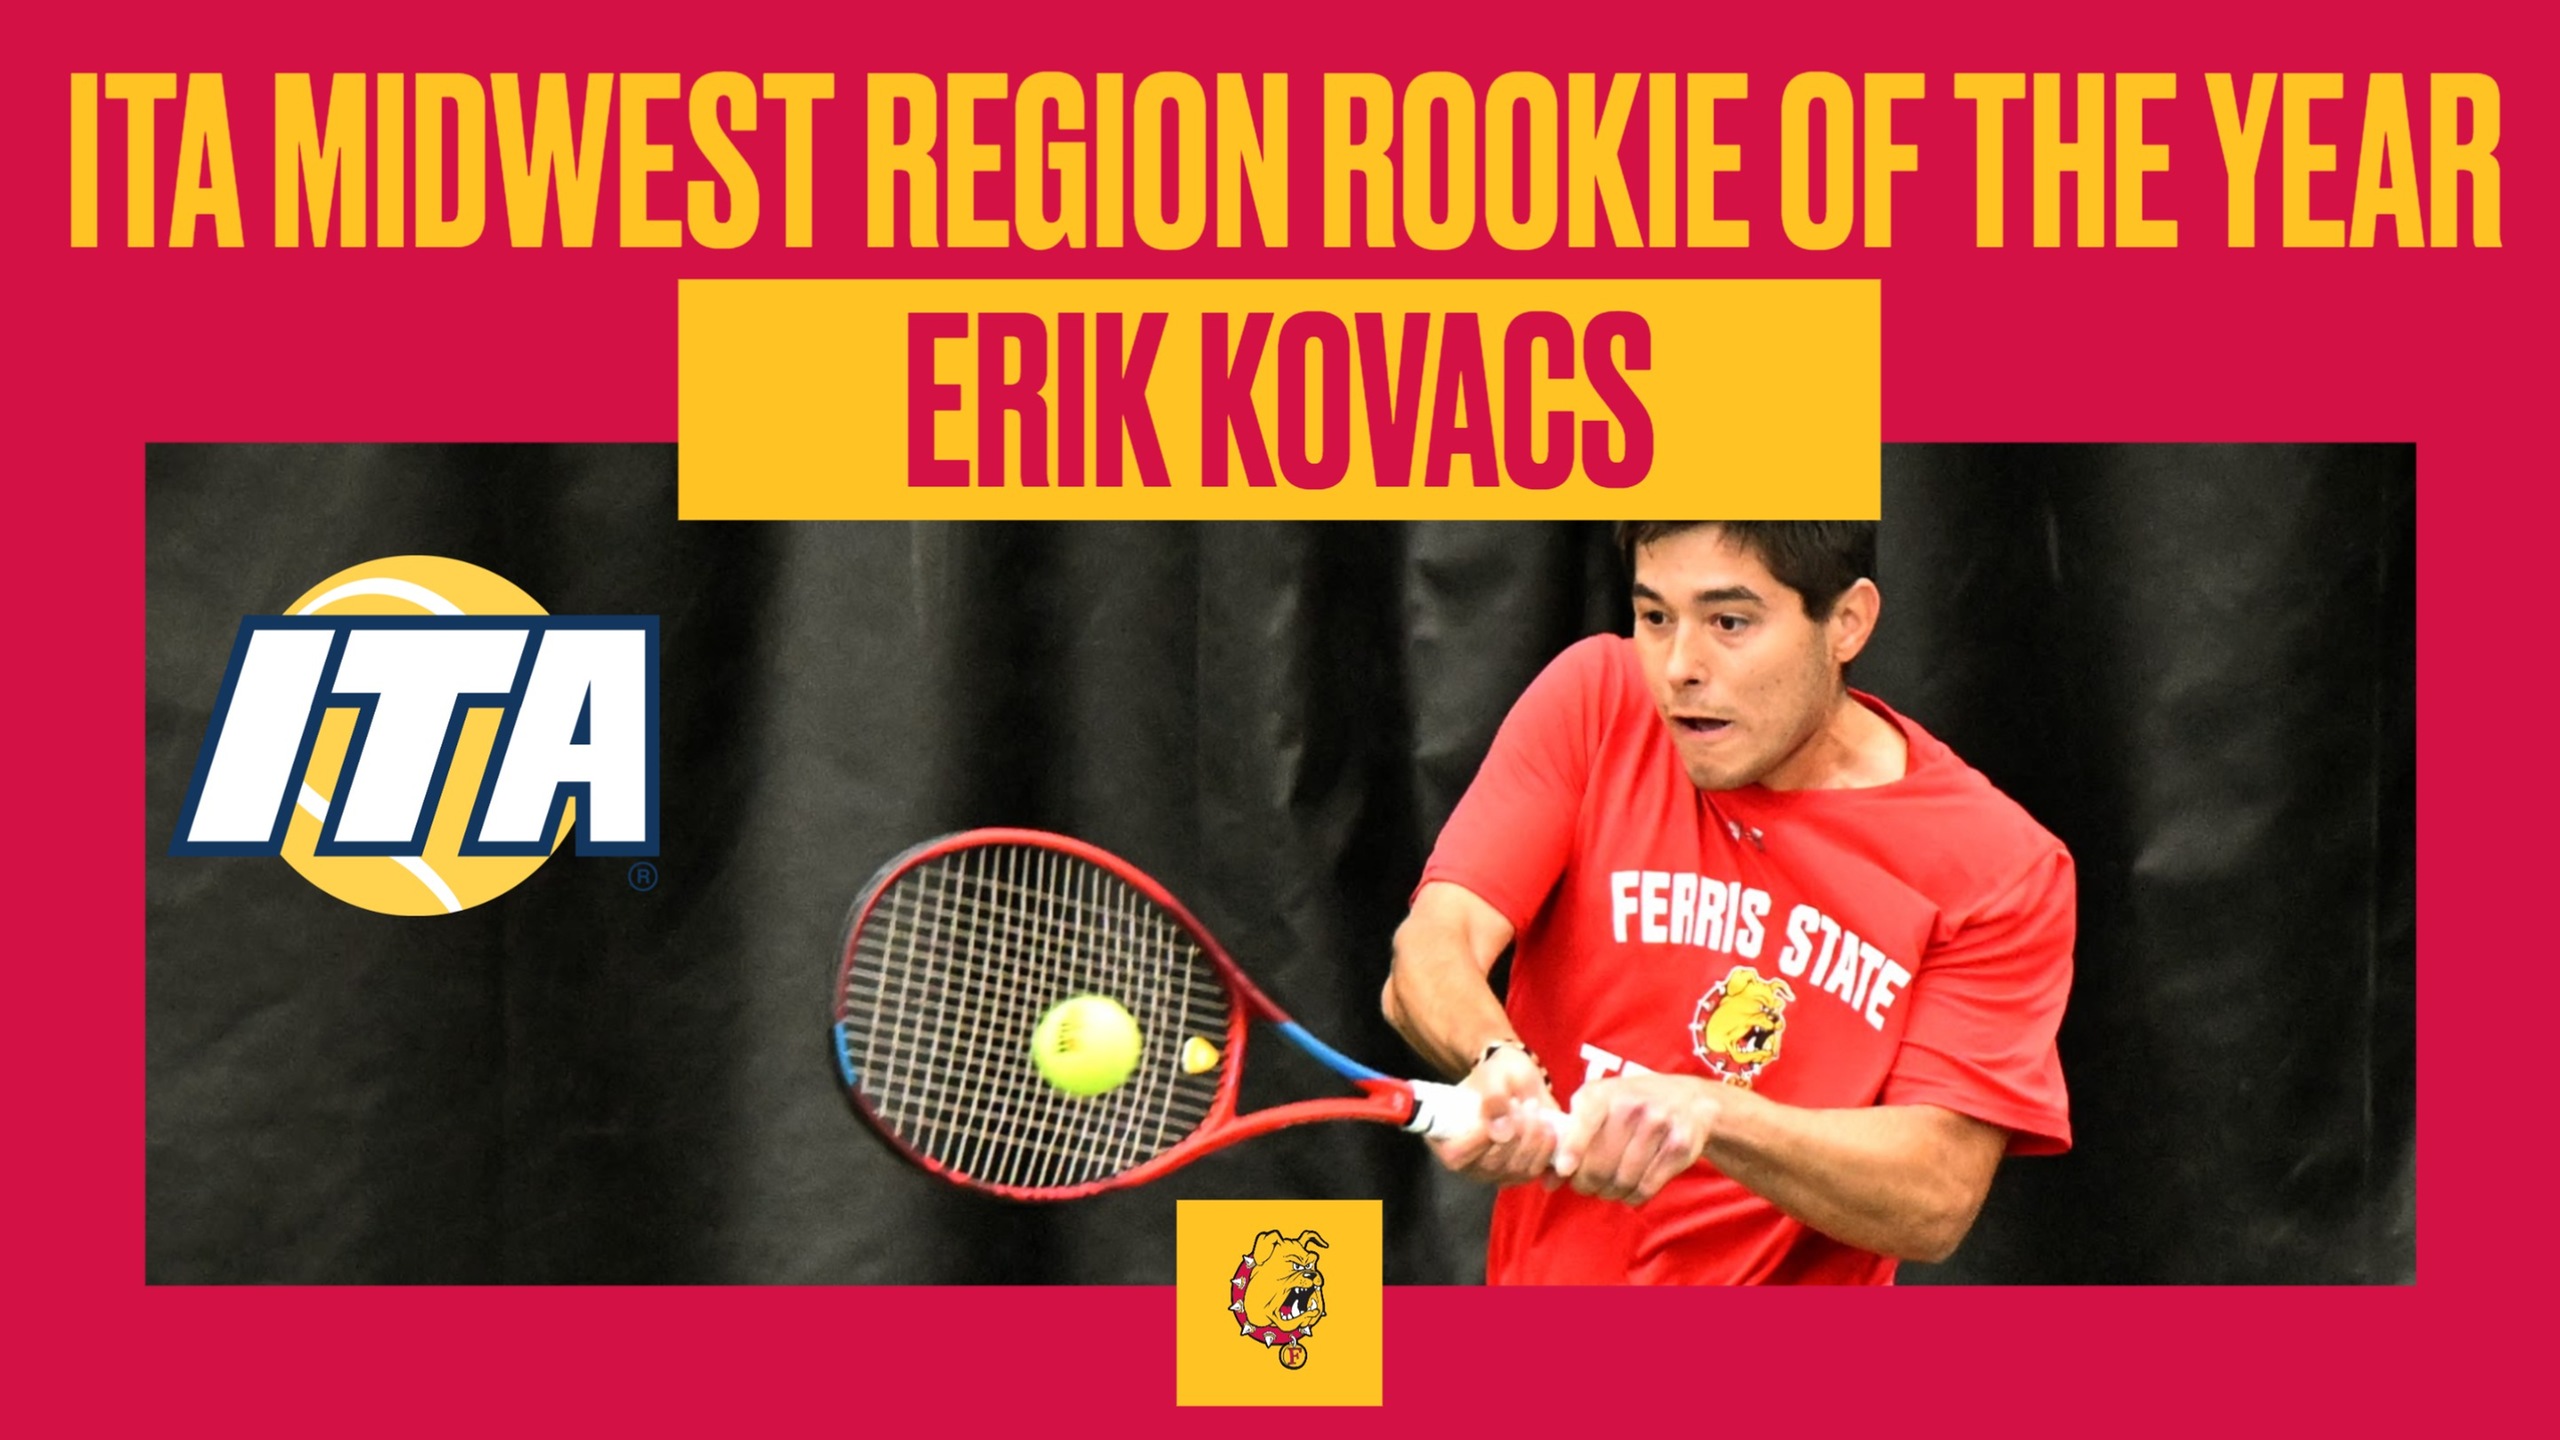 FSU's Erik Kovacs Chosen As ITA Midwest Region Rookie Of The Year